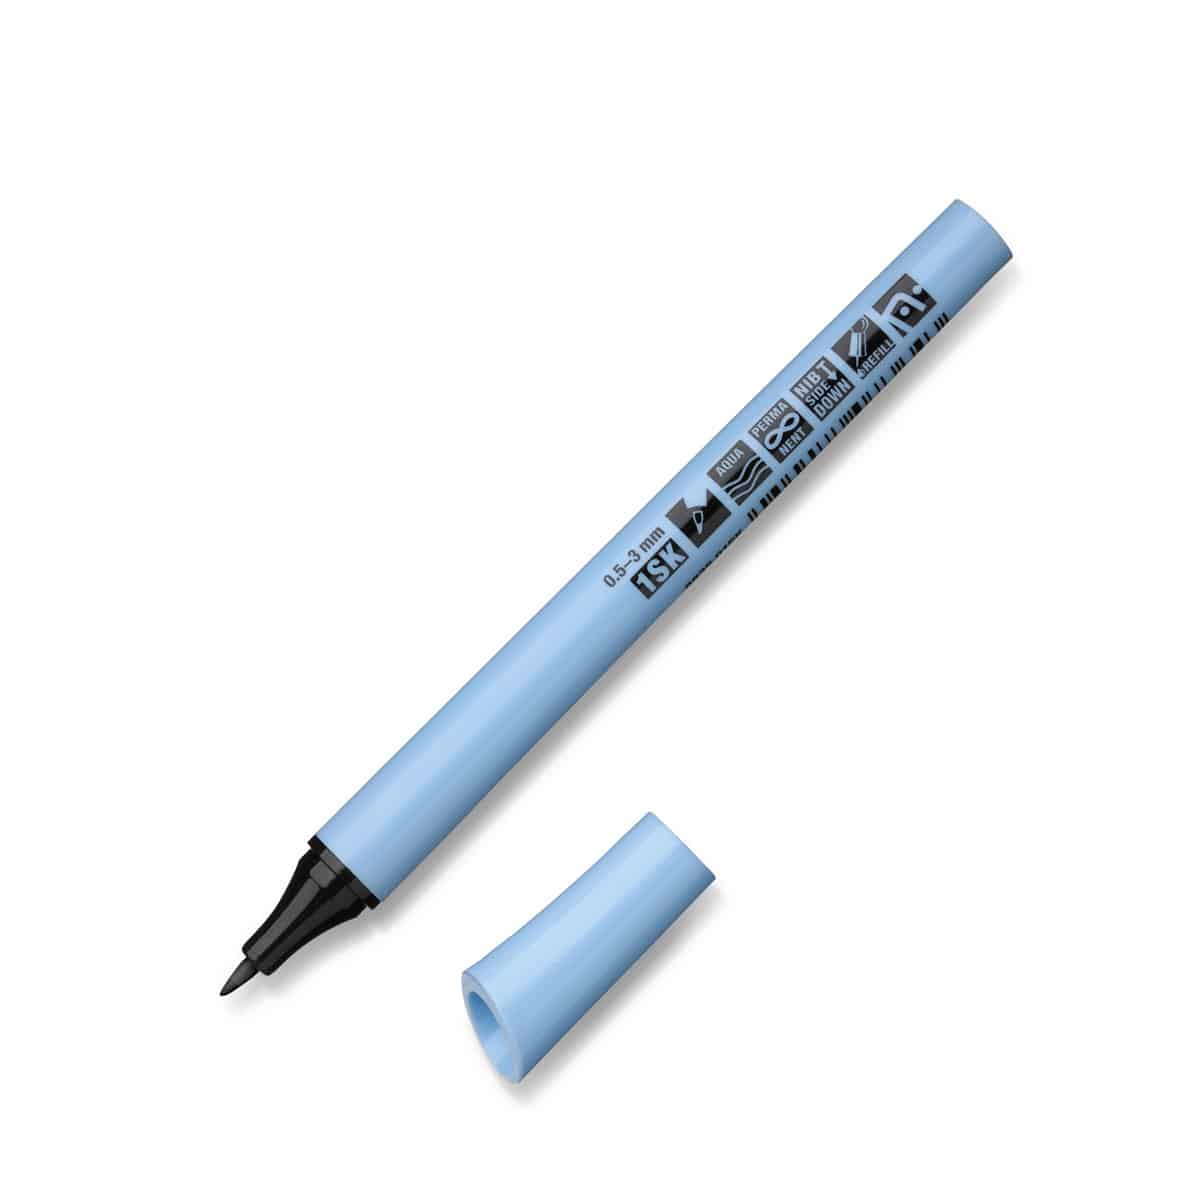 Neuland FineOne® Flex, flexible fiber nib 0.5-3 mm, single colors- 1sk schwarz verwischfest (permanent)